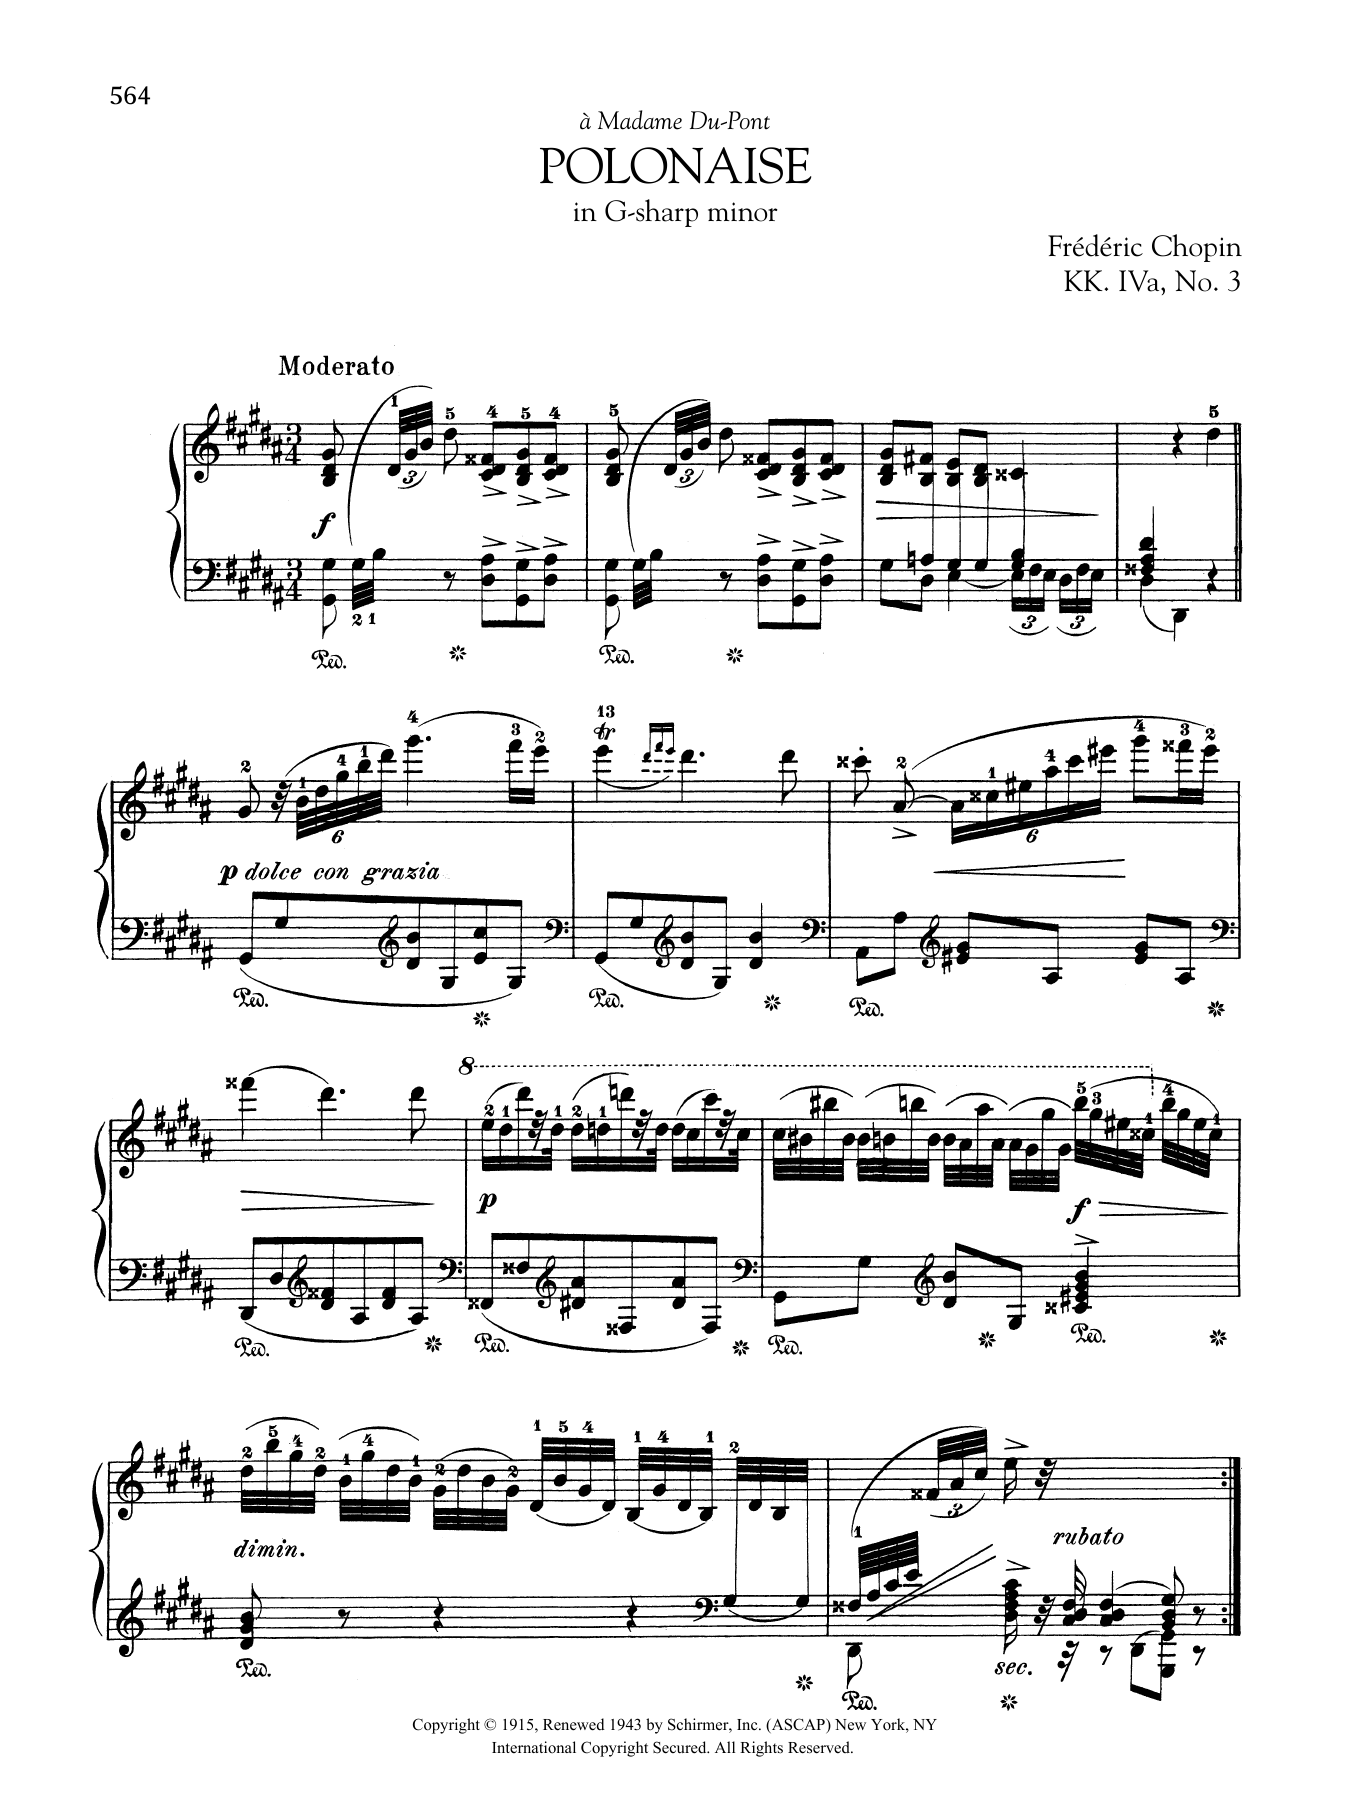 Download Frederic Chopin Polonaise in G-sharp minor, KK. IVa, No Sheet Music